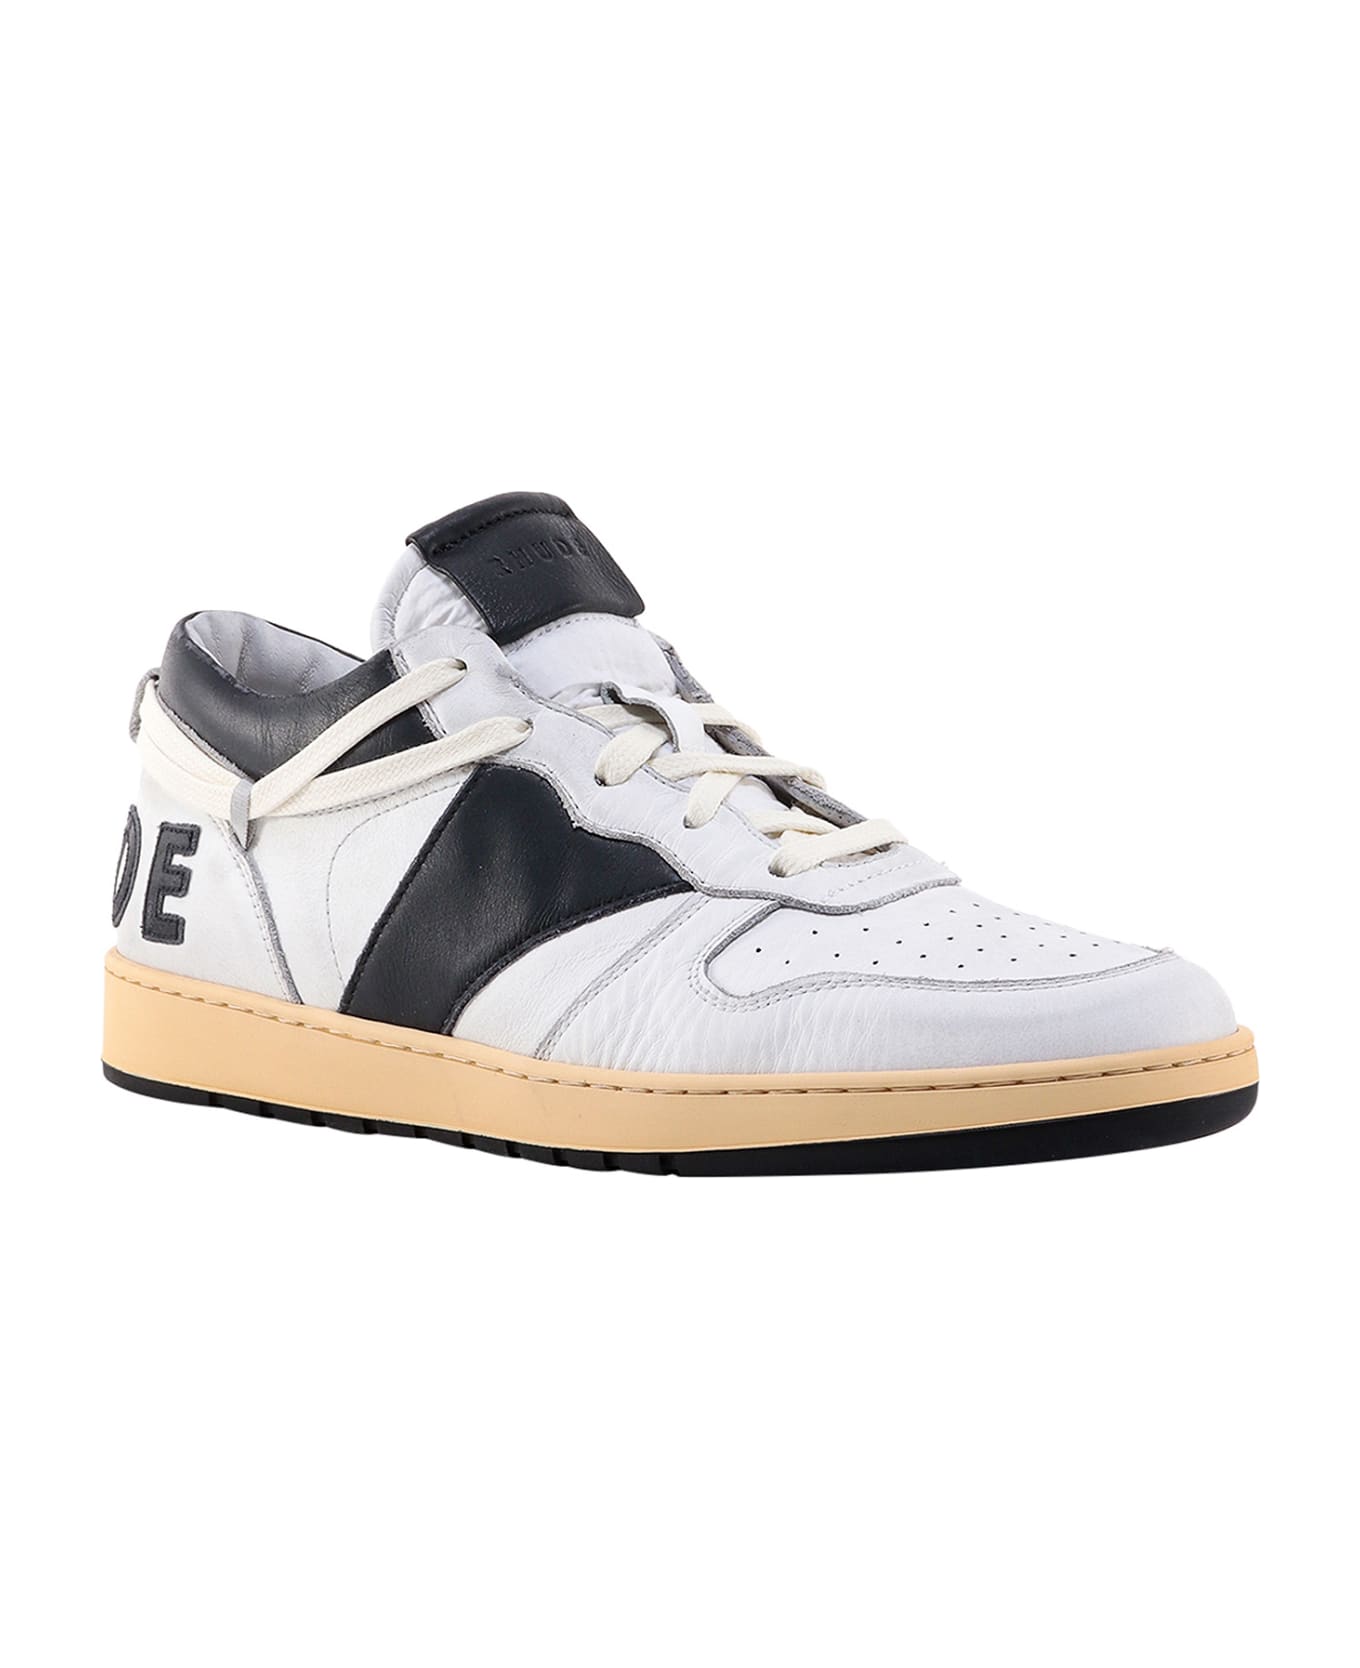 Rhude Rhecess Low Sneakers - 0128 WHITE/BLACK